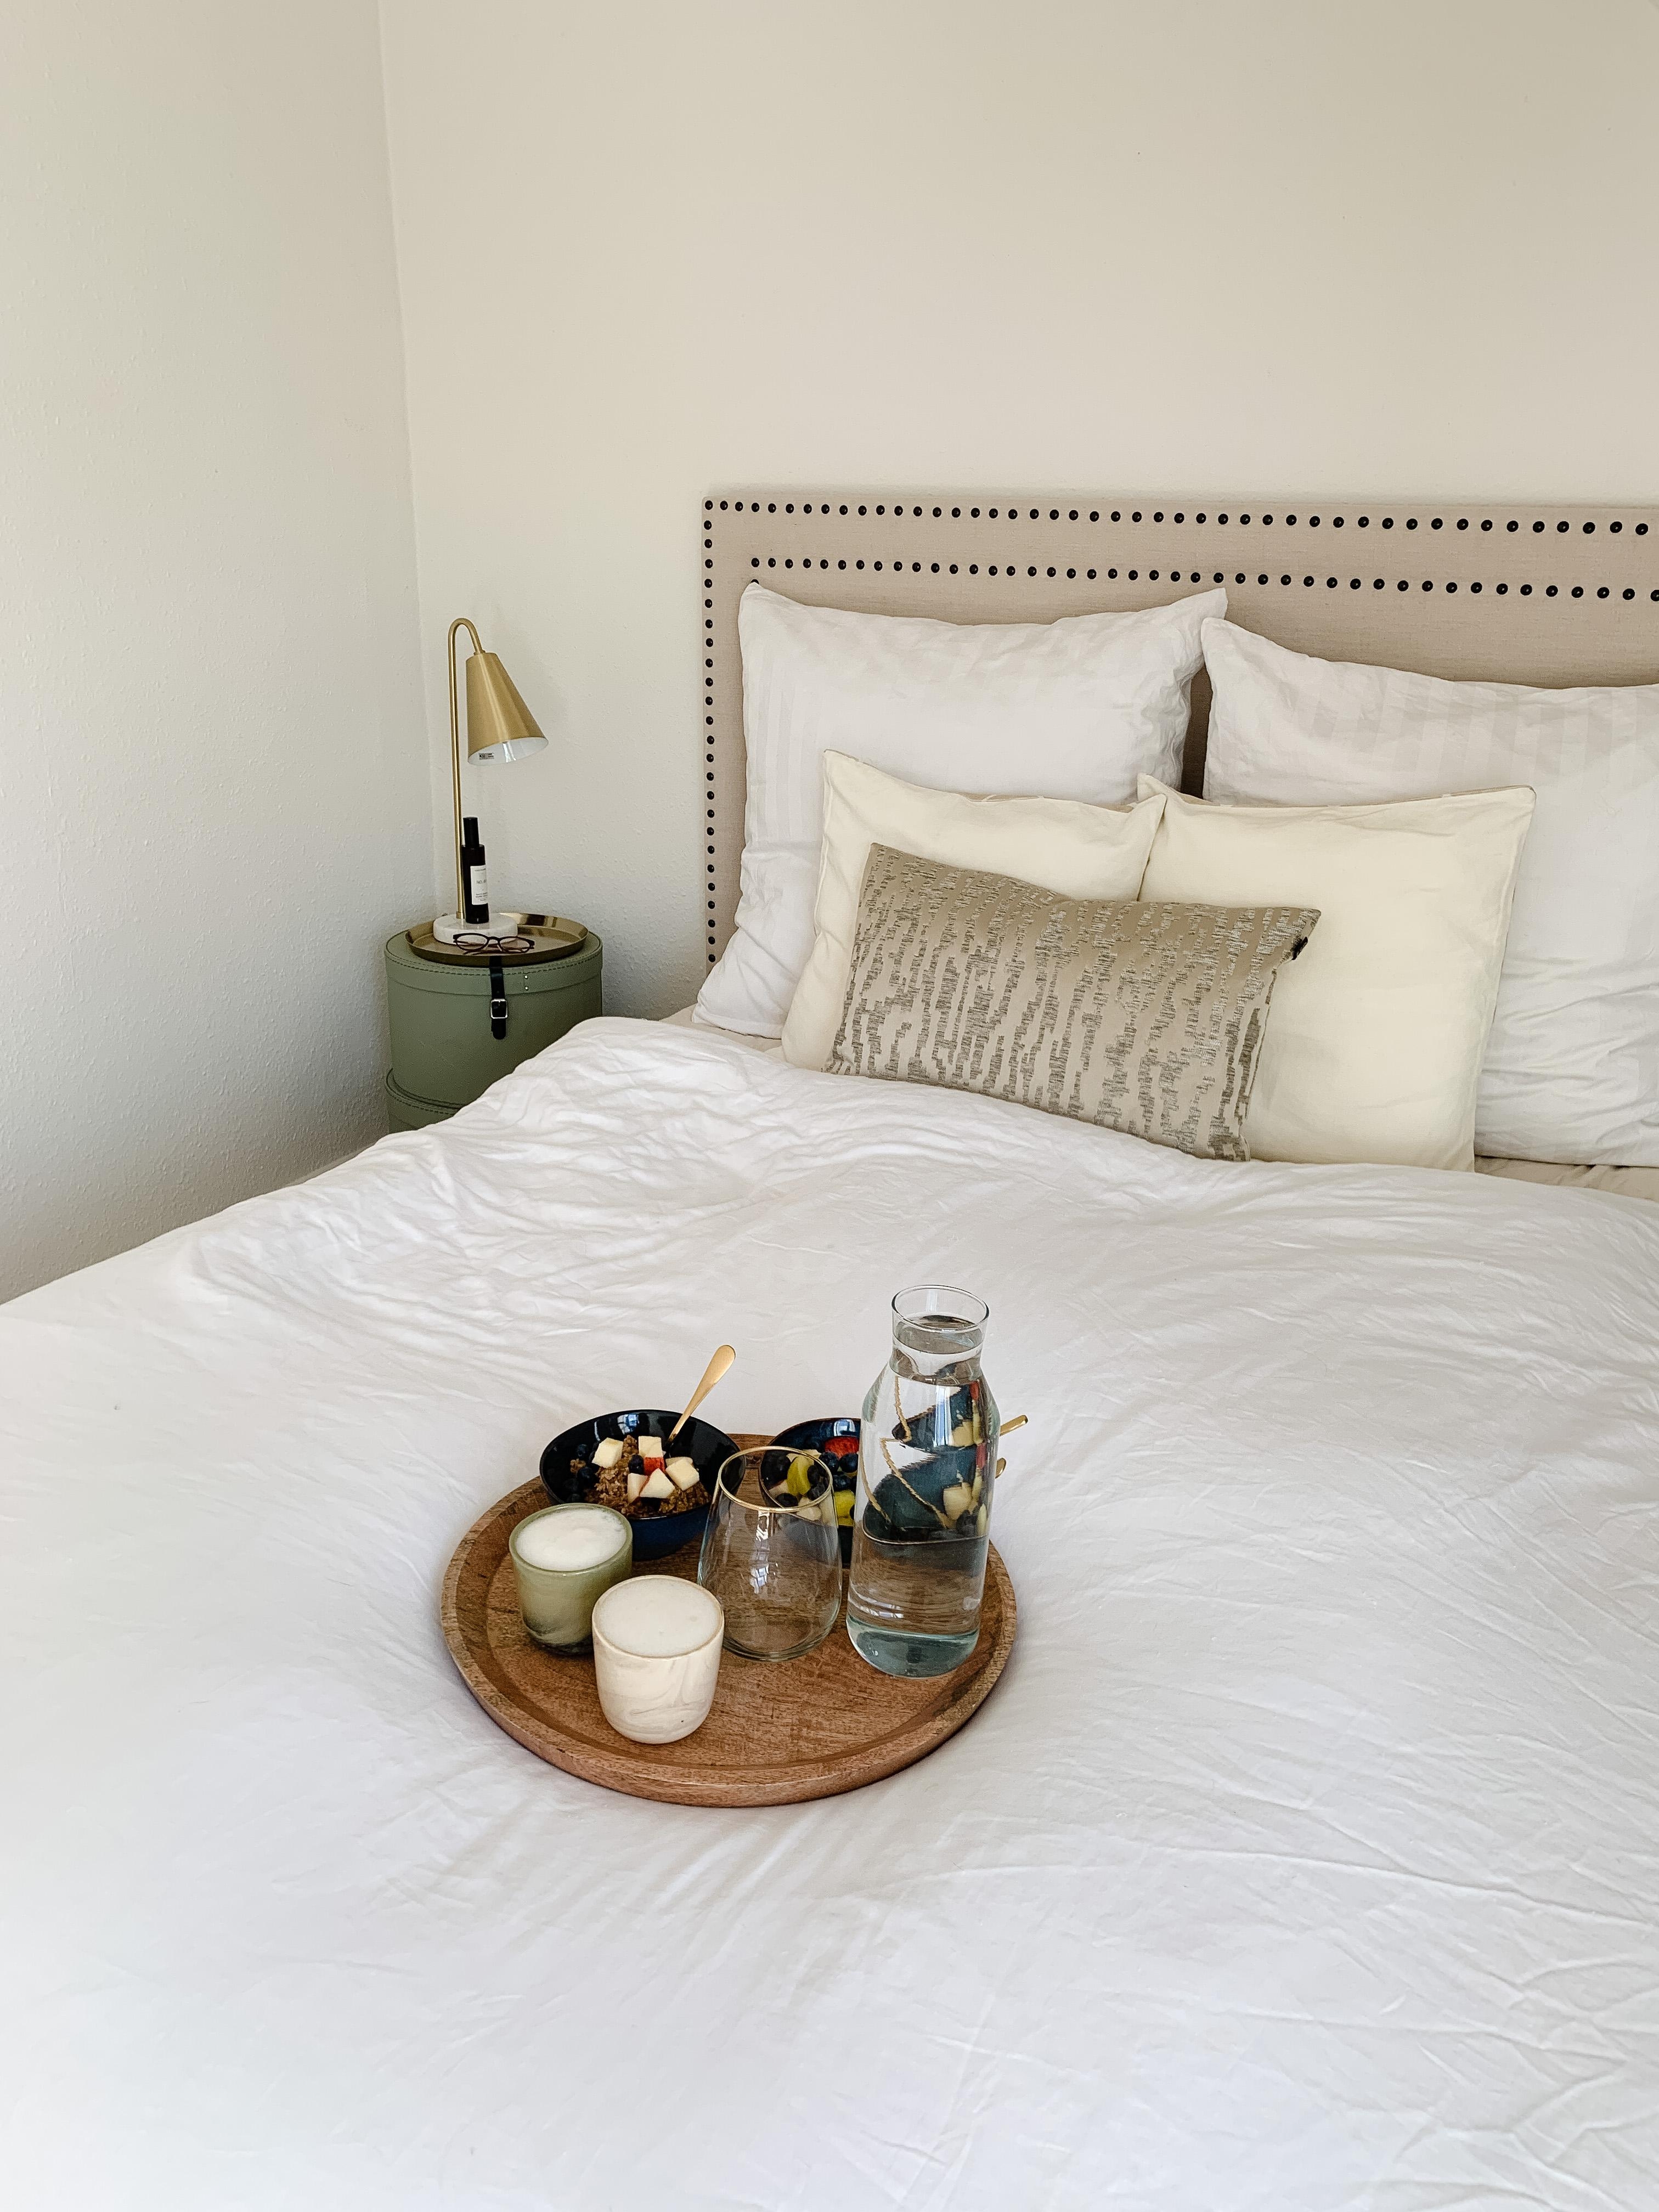 Breakfast in bed 
#schlafzimmer #bedroom #whitesheets #bedroomdecor #frühstück #interior